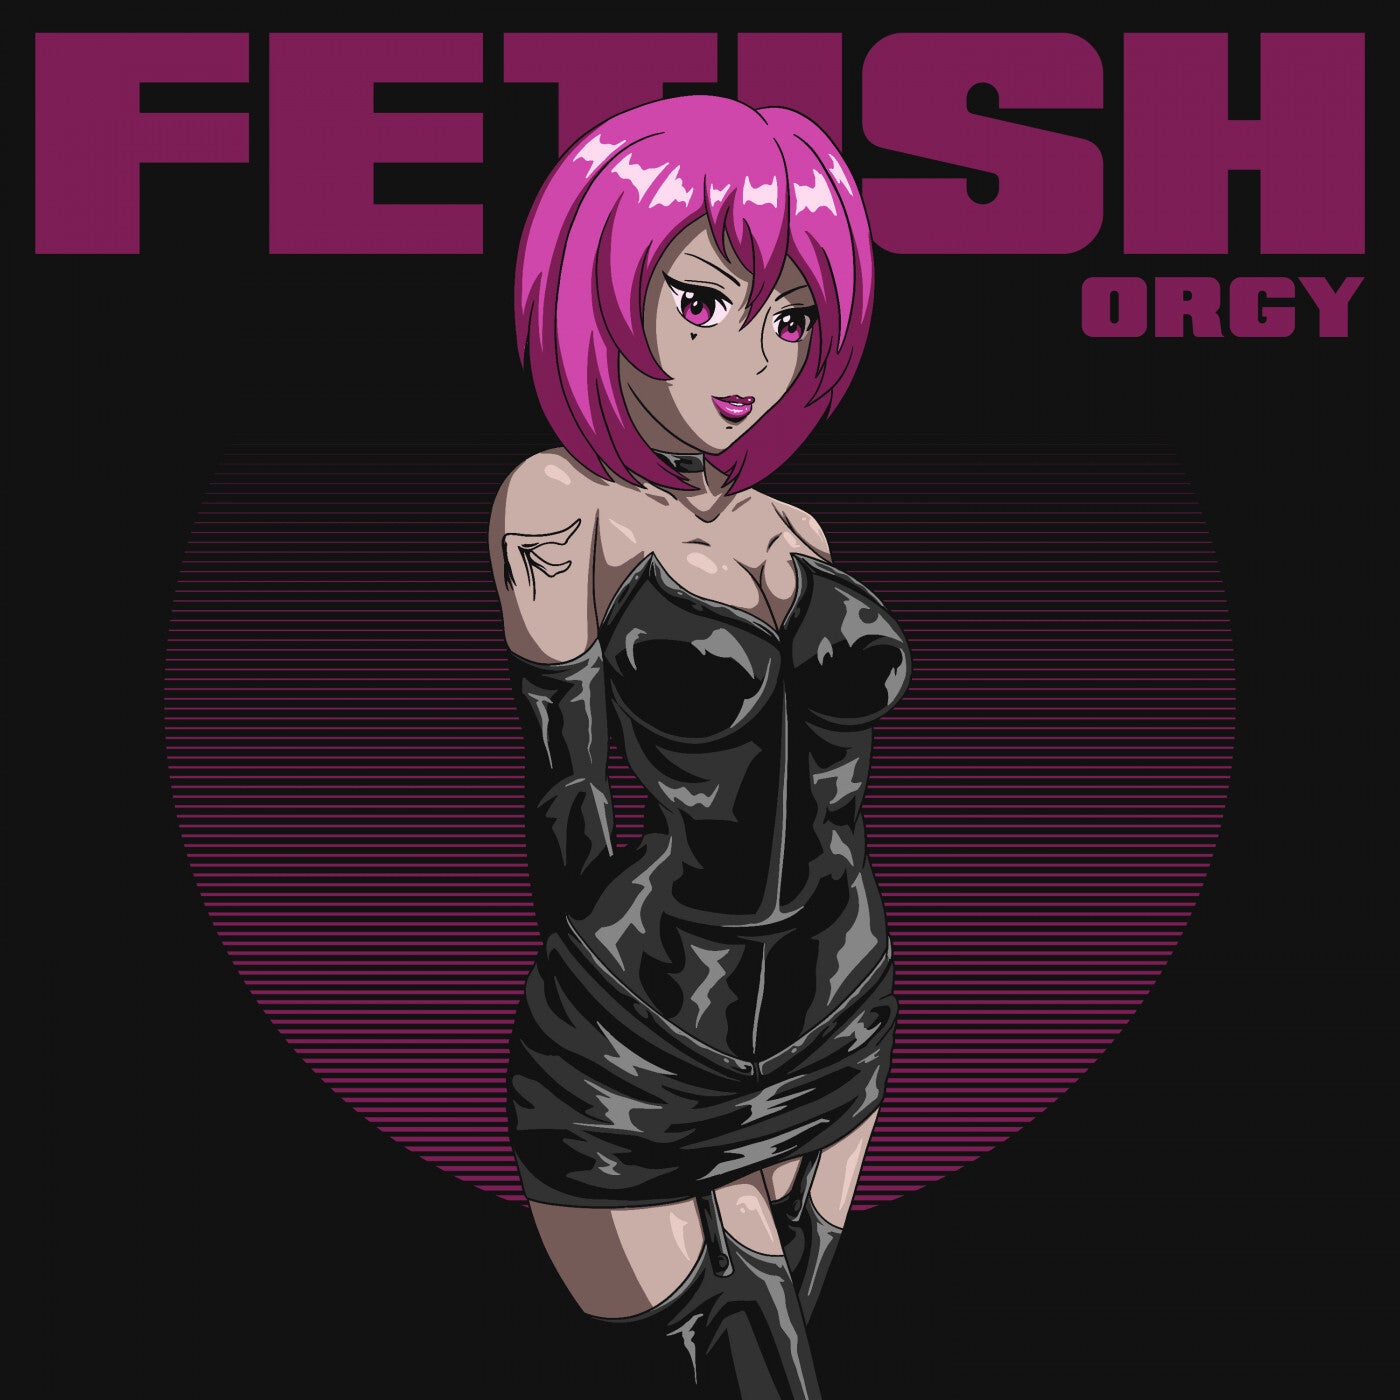 Fetish Orgy